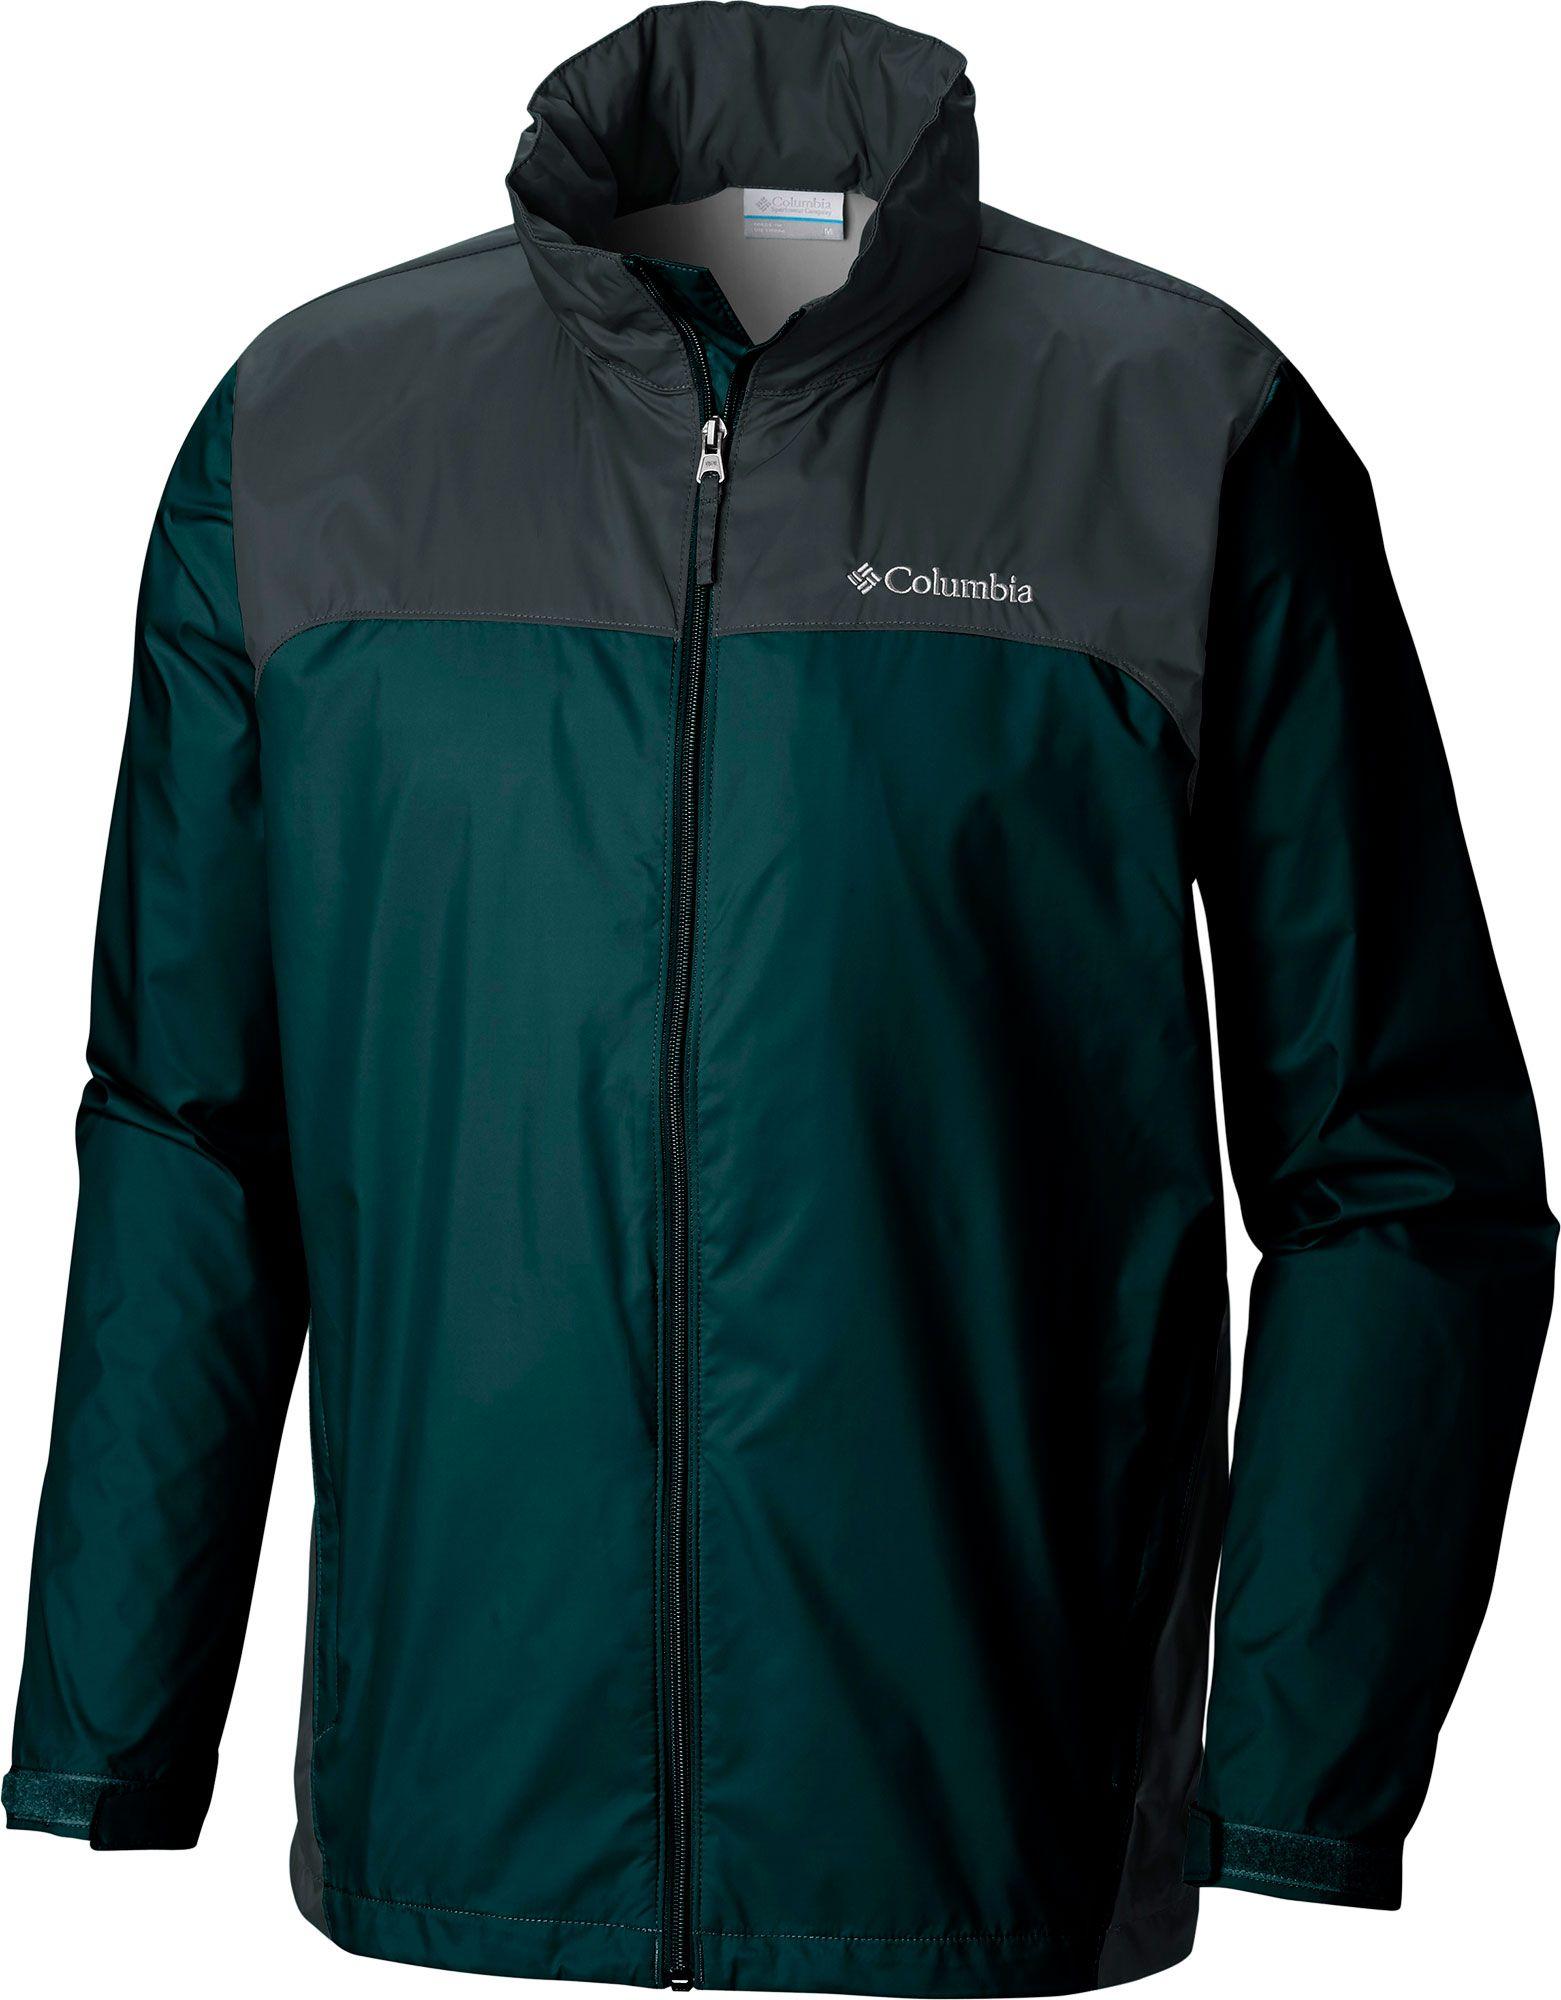 Columbia Synthetic Glennaker Lakes Rain Jacket in Green for Men - Lyst